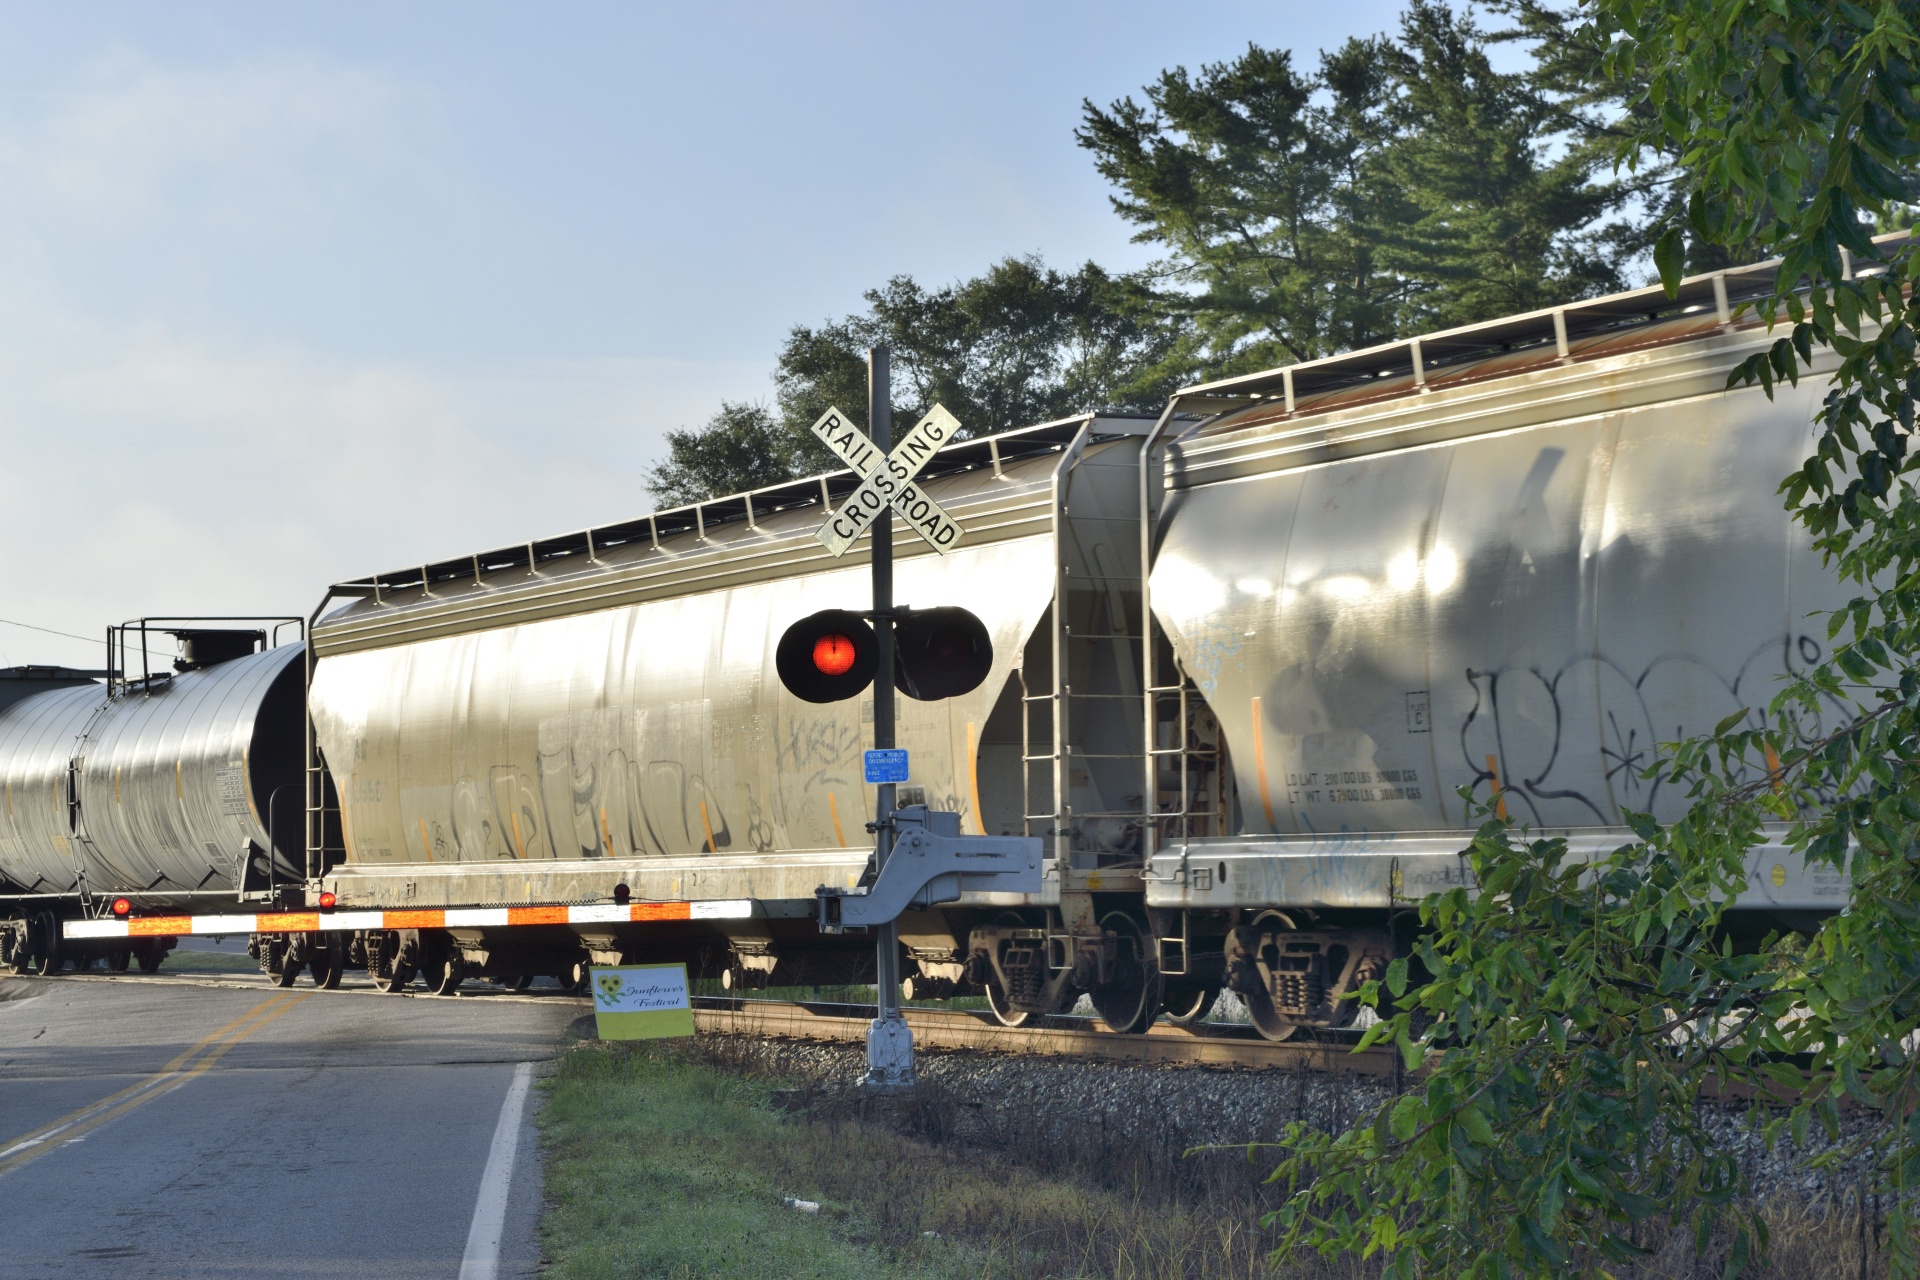 Was The Amtrak Derailment Avoidable?